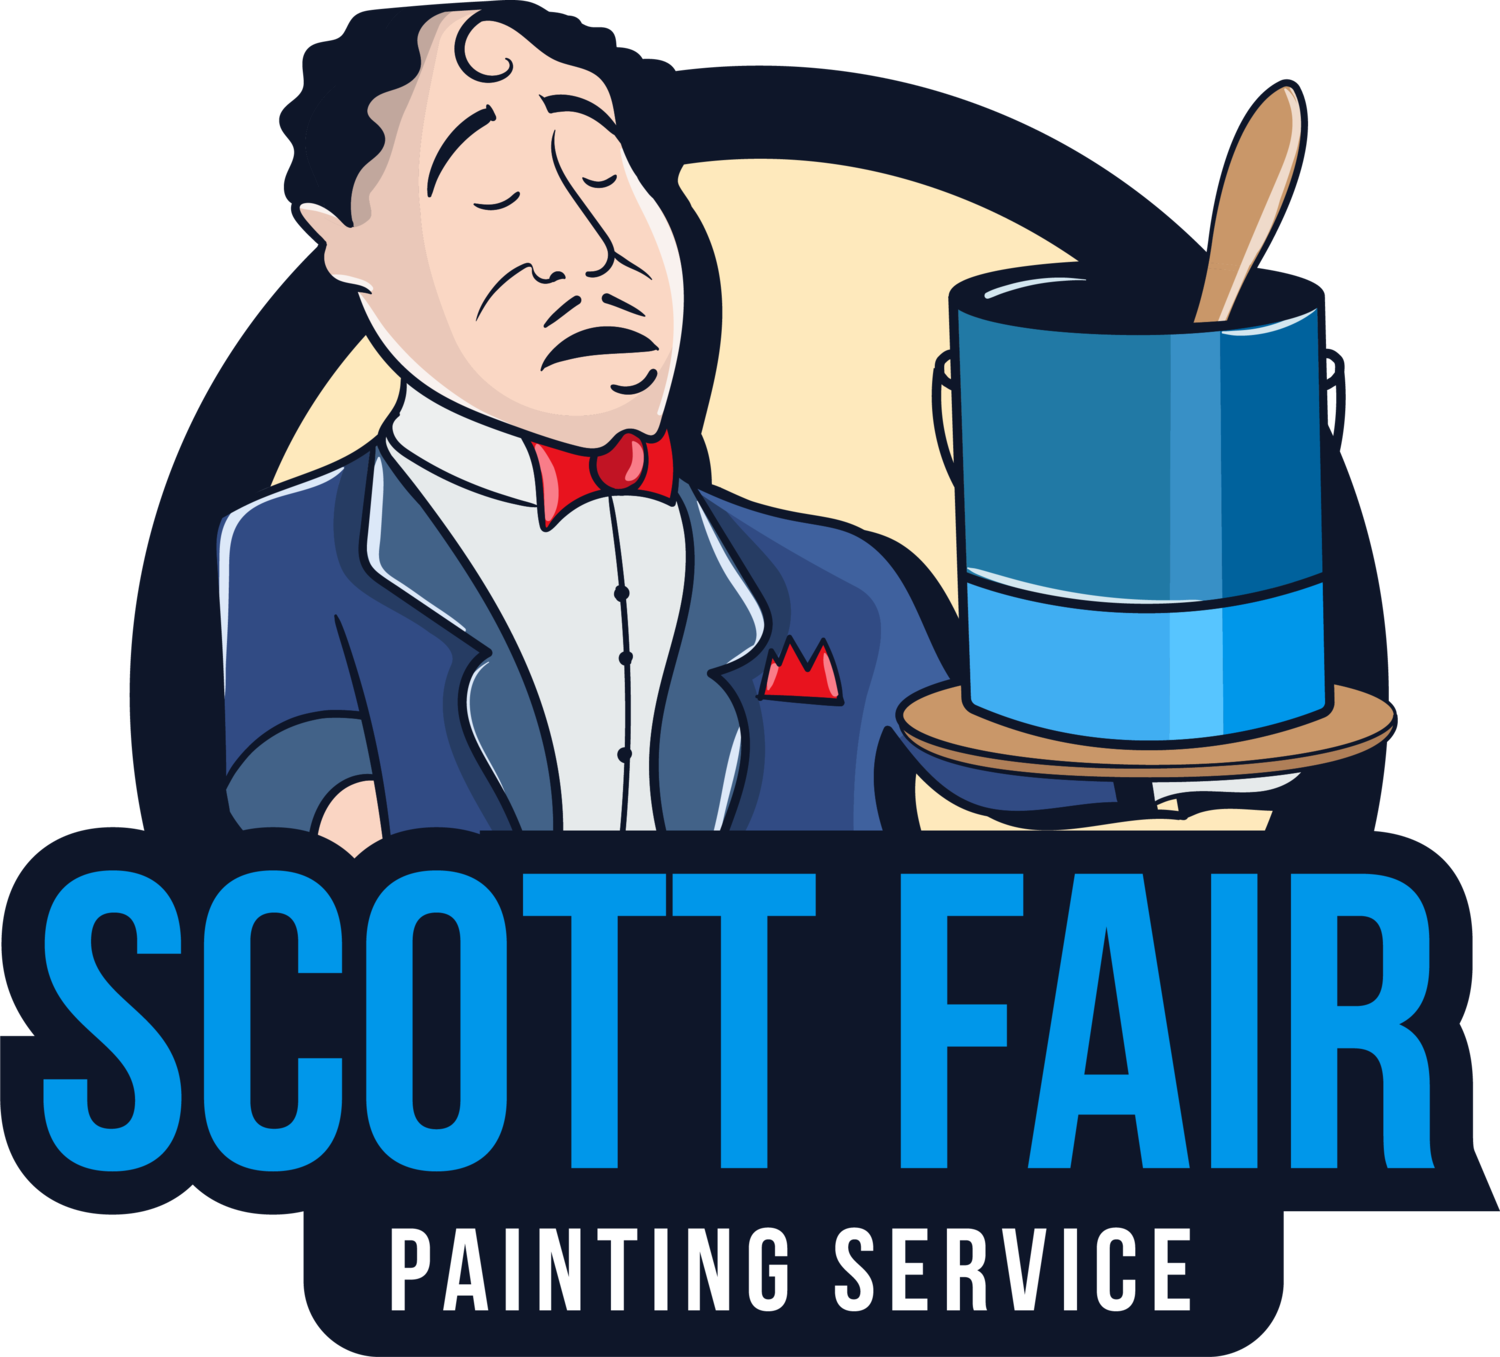 Scott Fair Painting Service